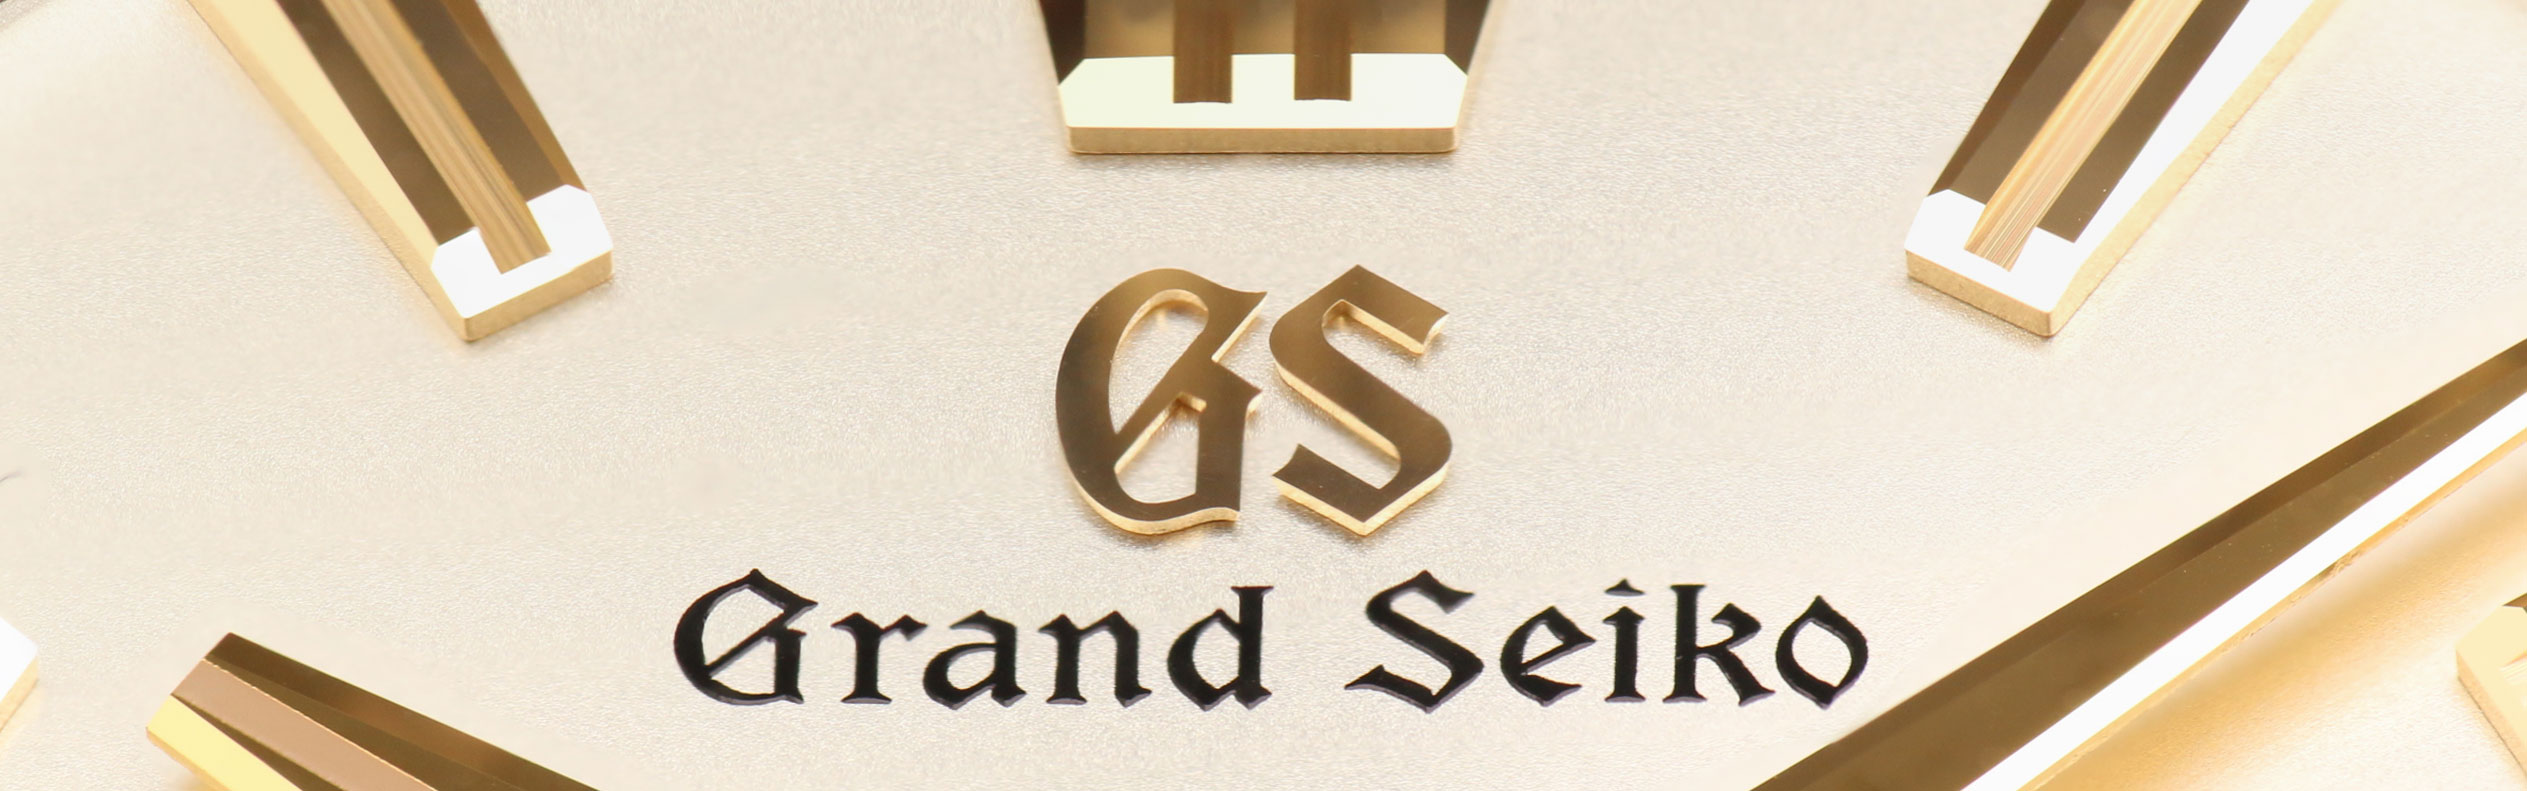 Grand Seiko SLGH002 dial detail of golden applied logo .